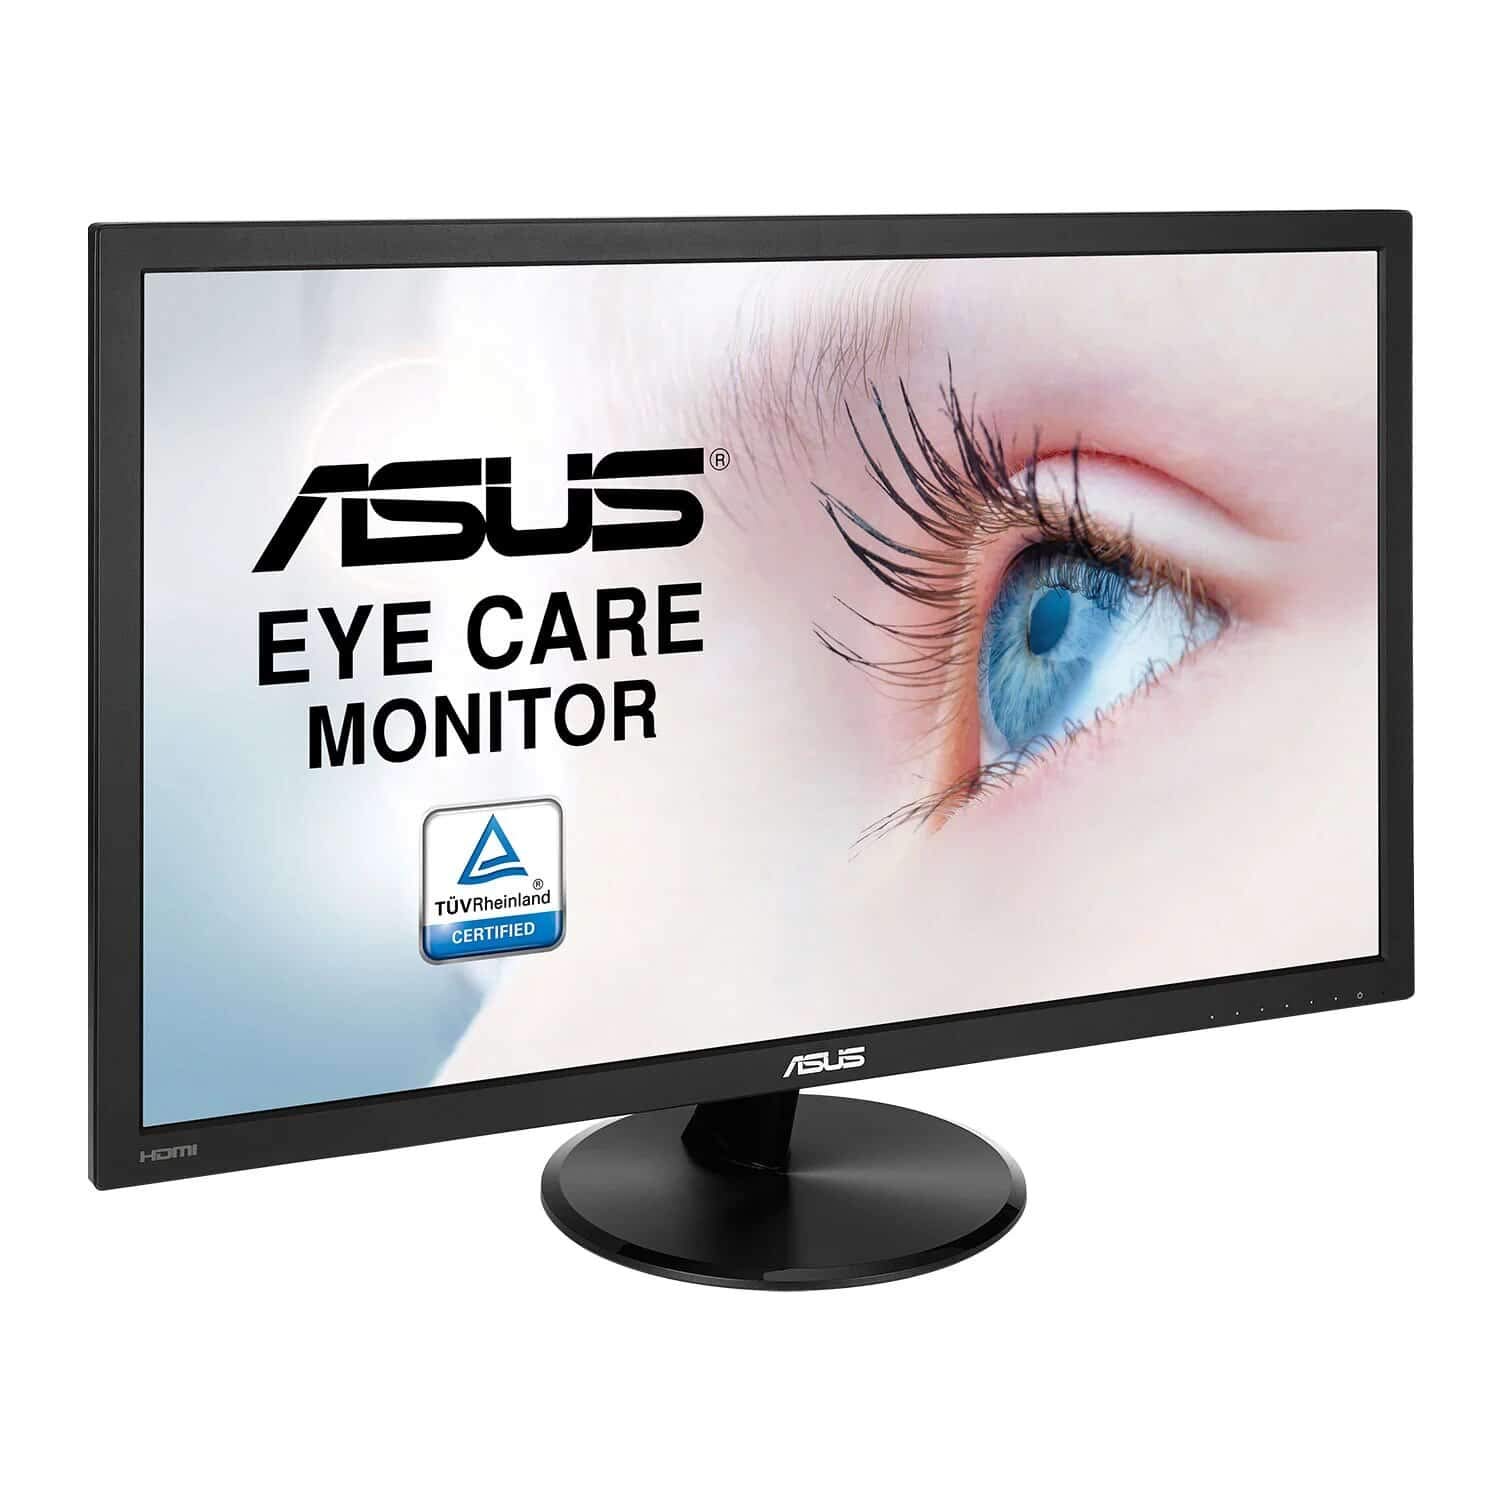 ASUS Eye Care VP247HAE | 24 Zoll Full HD Monitor | 60 Hz, 5ms GtG, Flimmerfrei, Blaulichtfilter | VA Panel, 16:9, 1920x1080 | HDMI, D-Sub